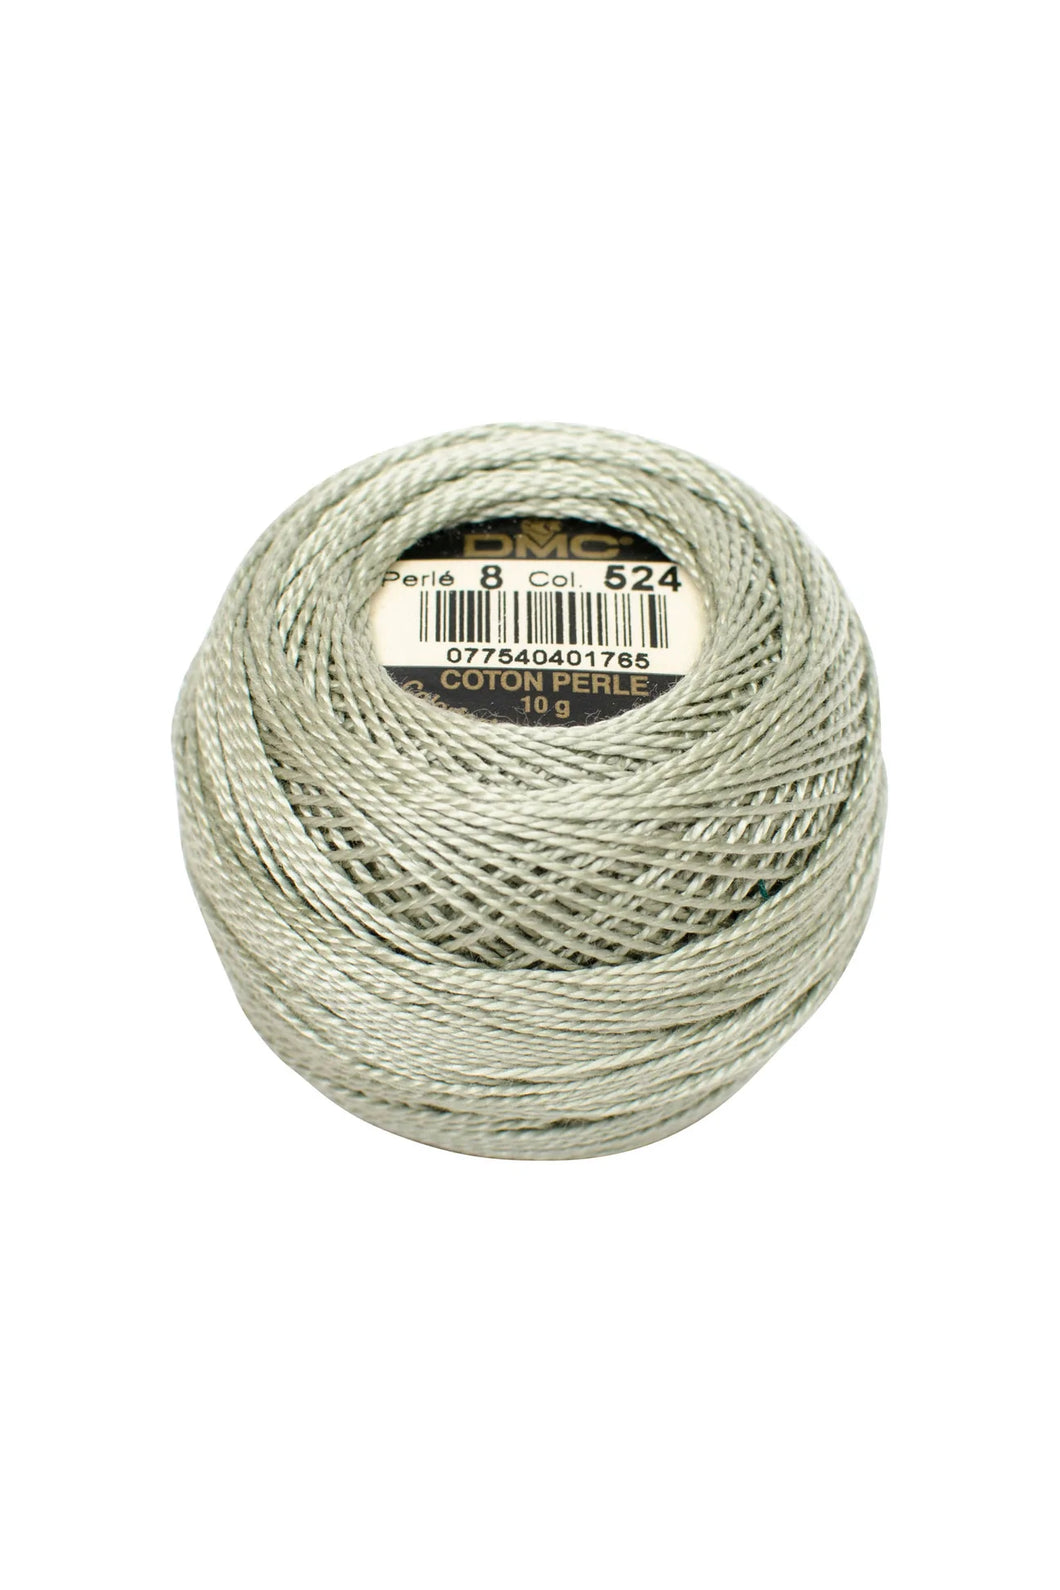 DMC Perle Cotton Thread No 524 | Very Light Fern Green